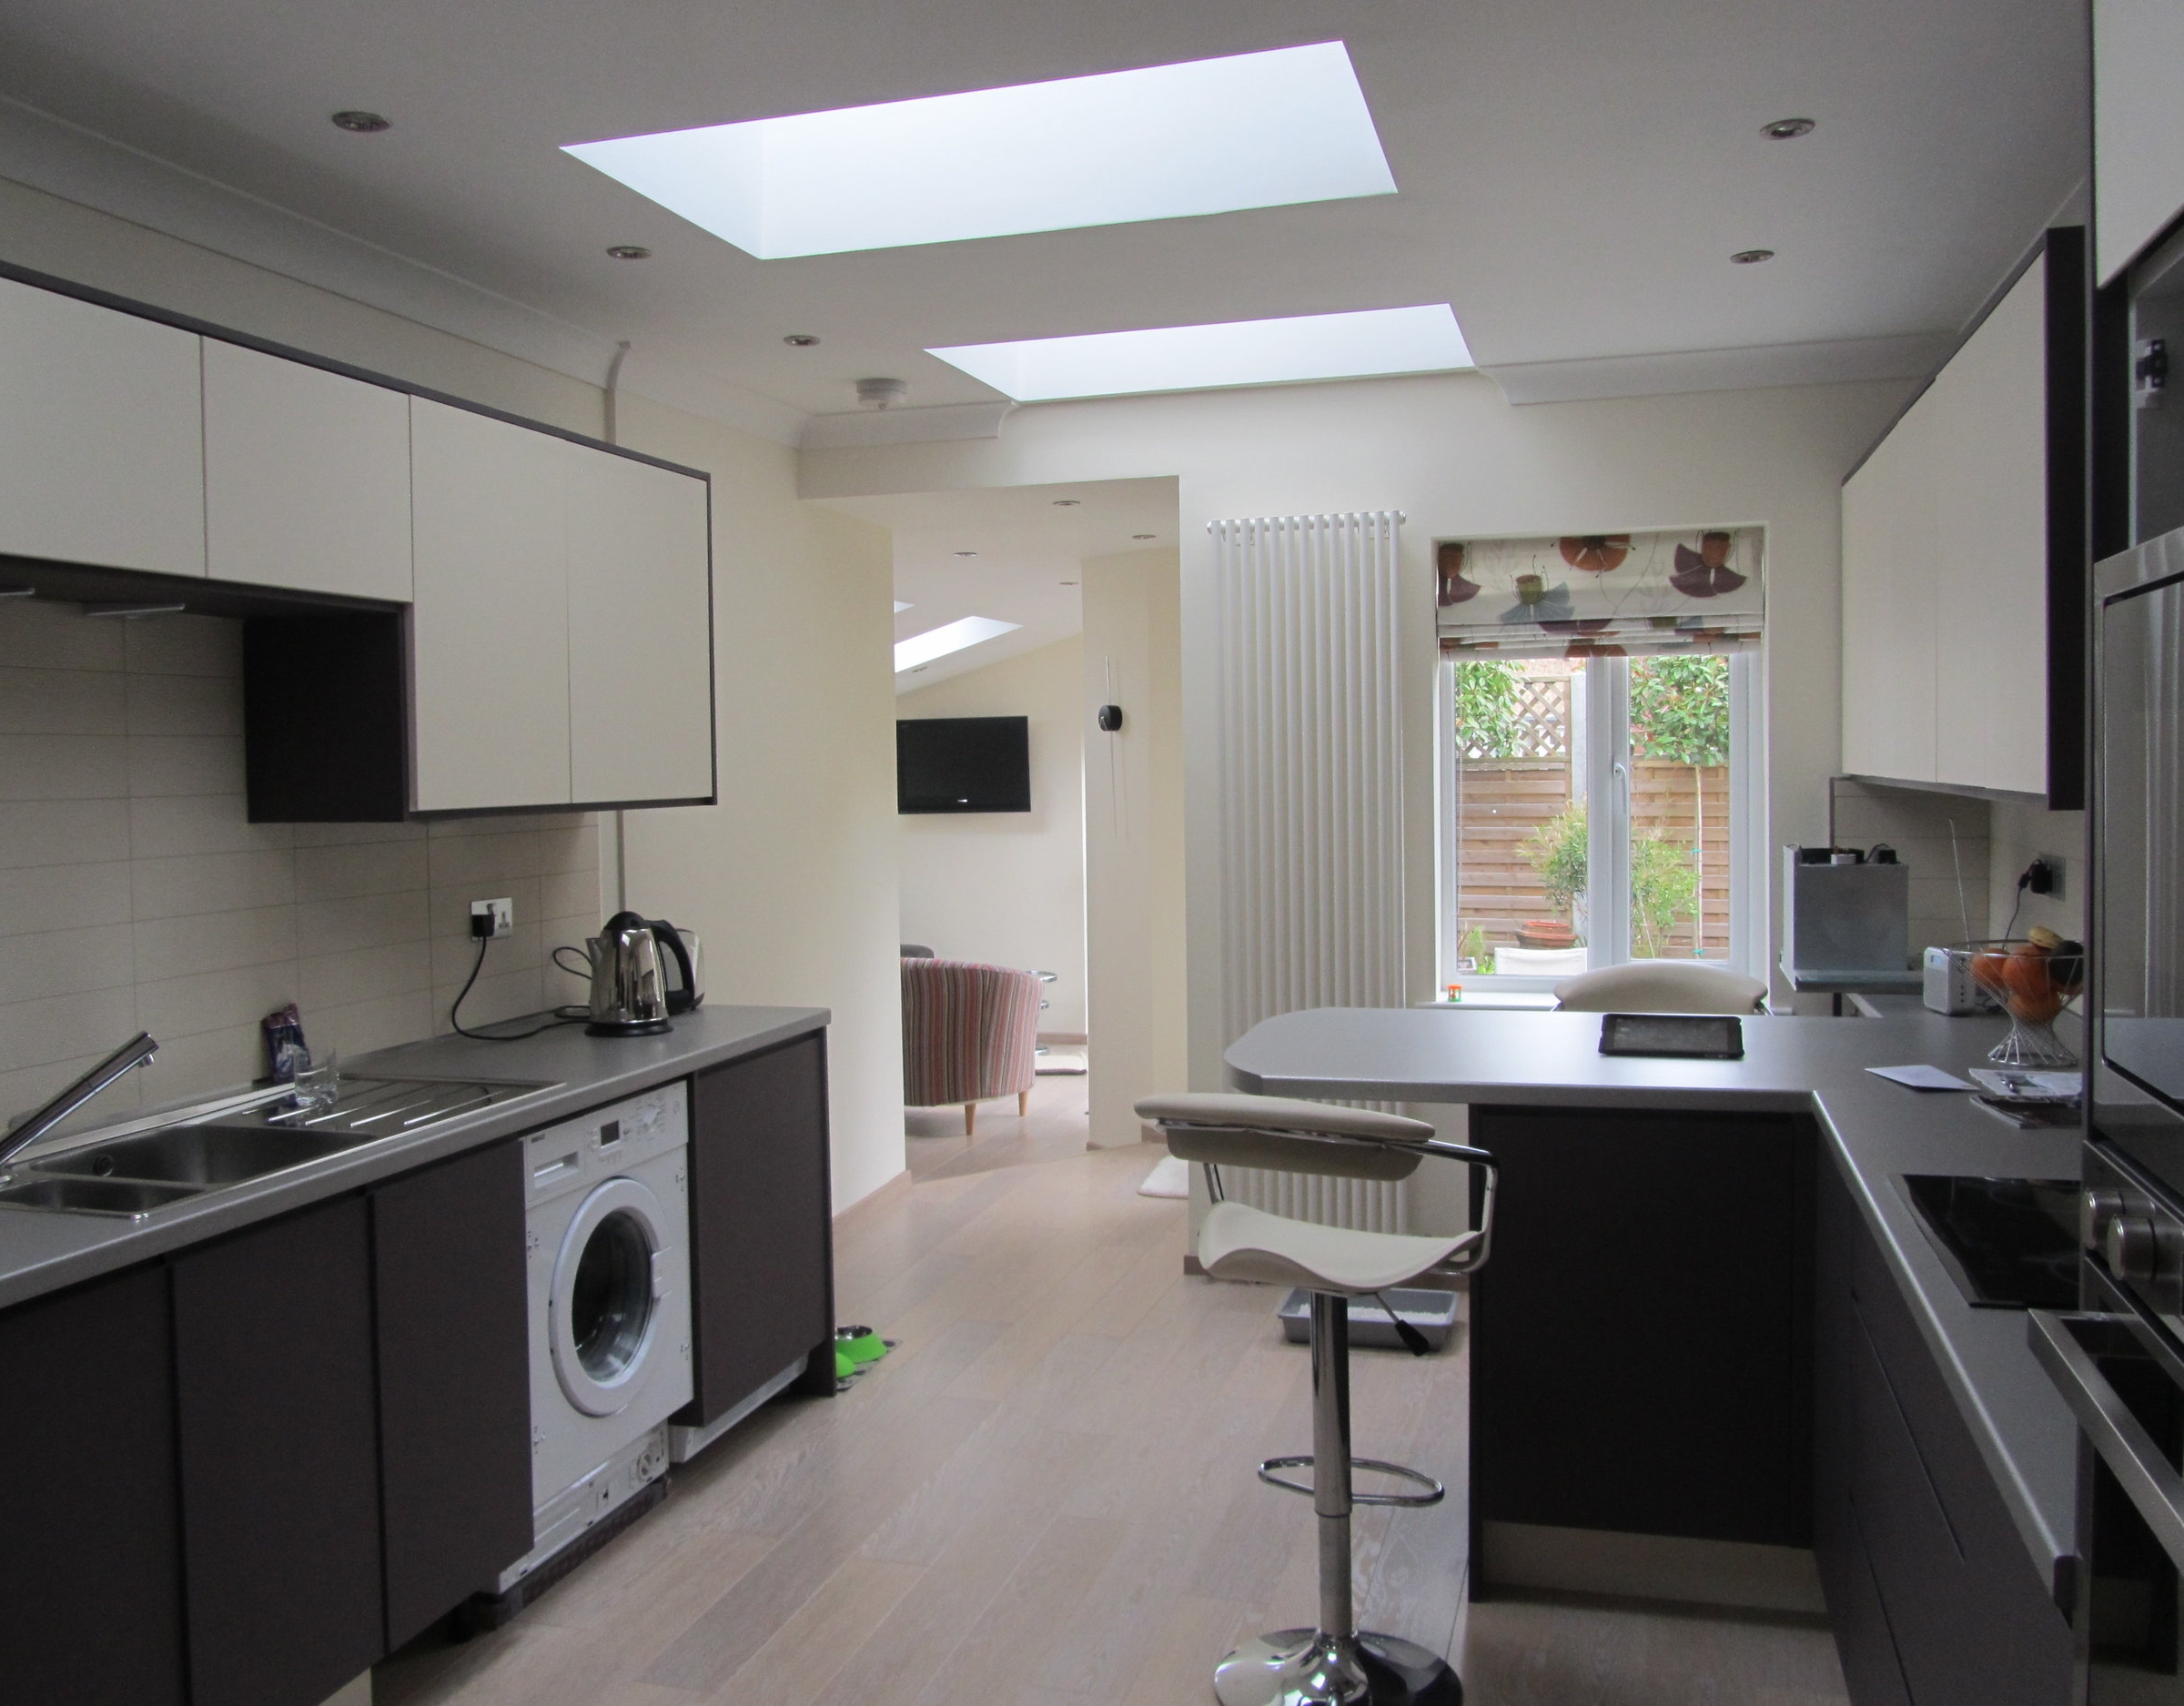 Bainton House - Contemporary Kitchen Extension - Beverley Architects - Samuel Kendall Associates